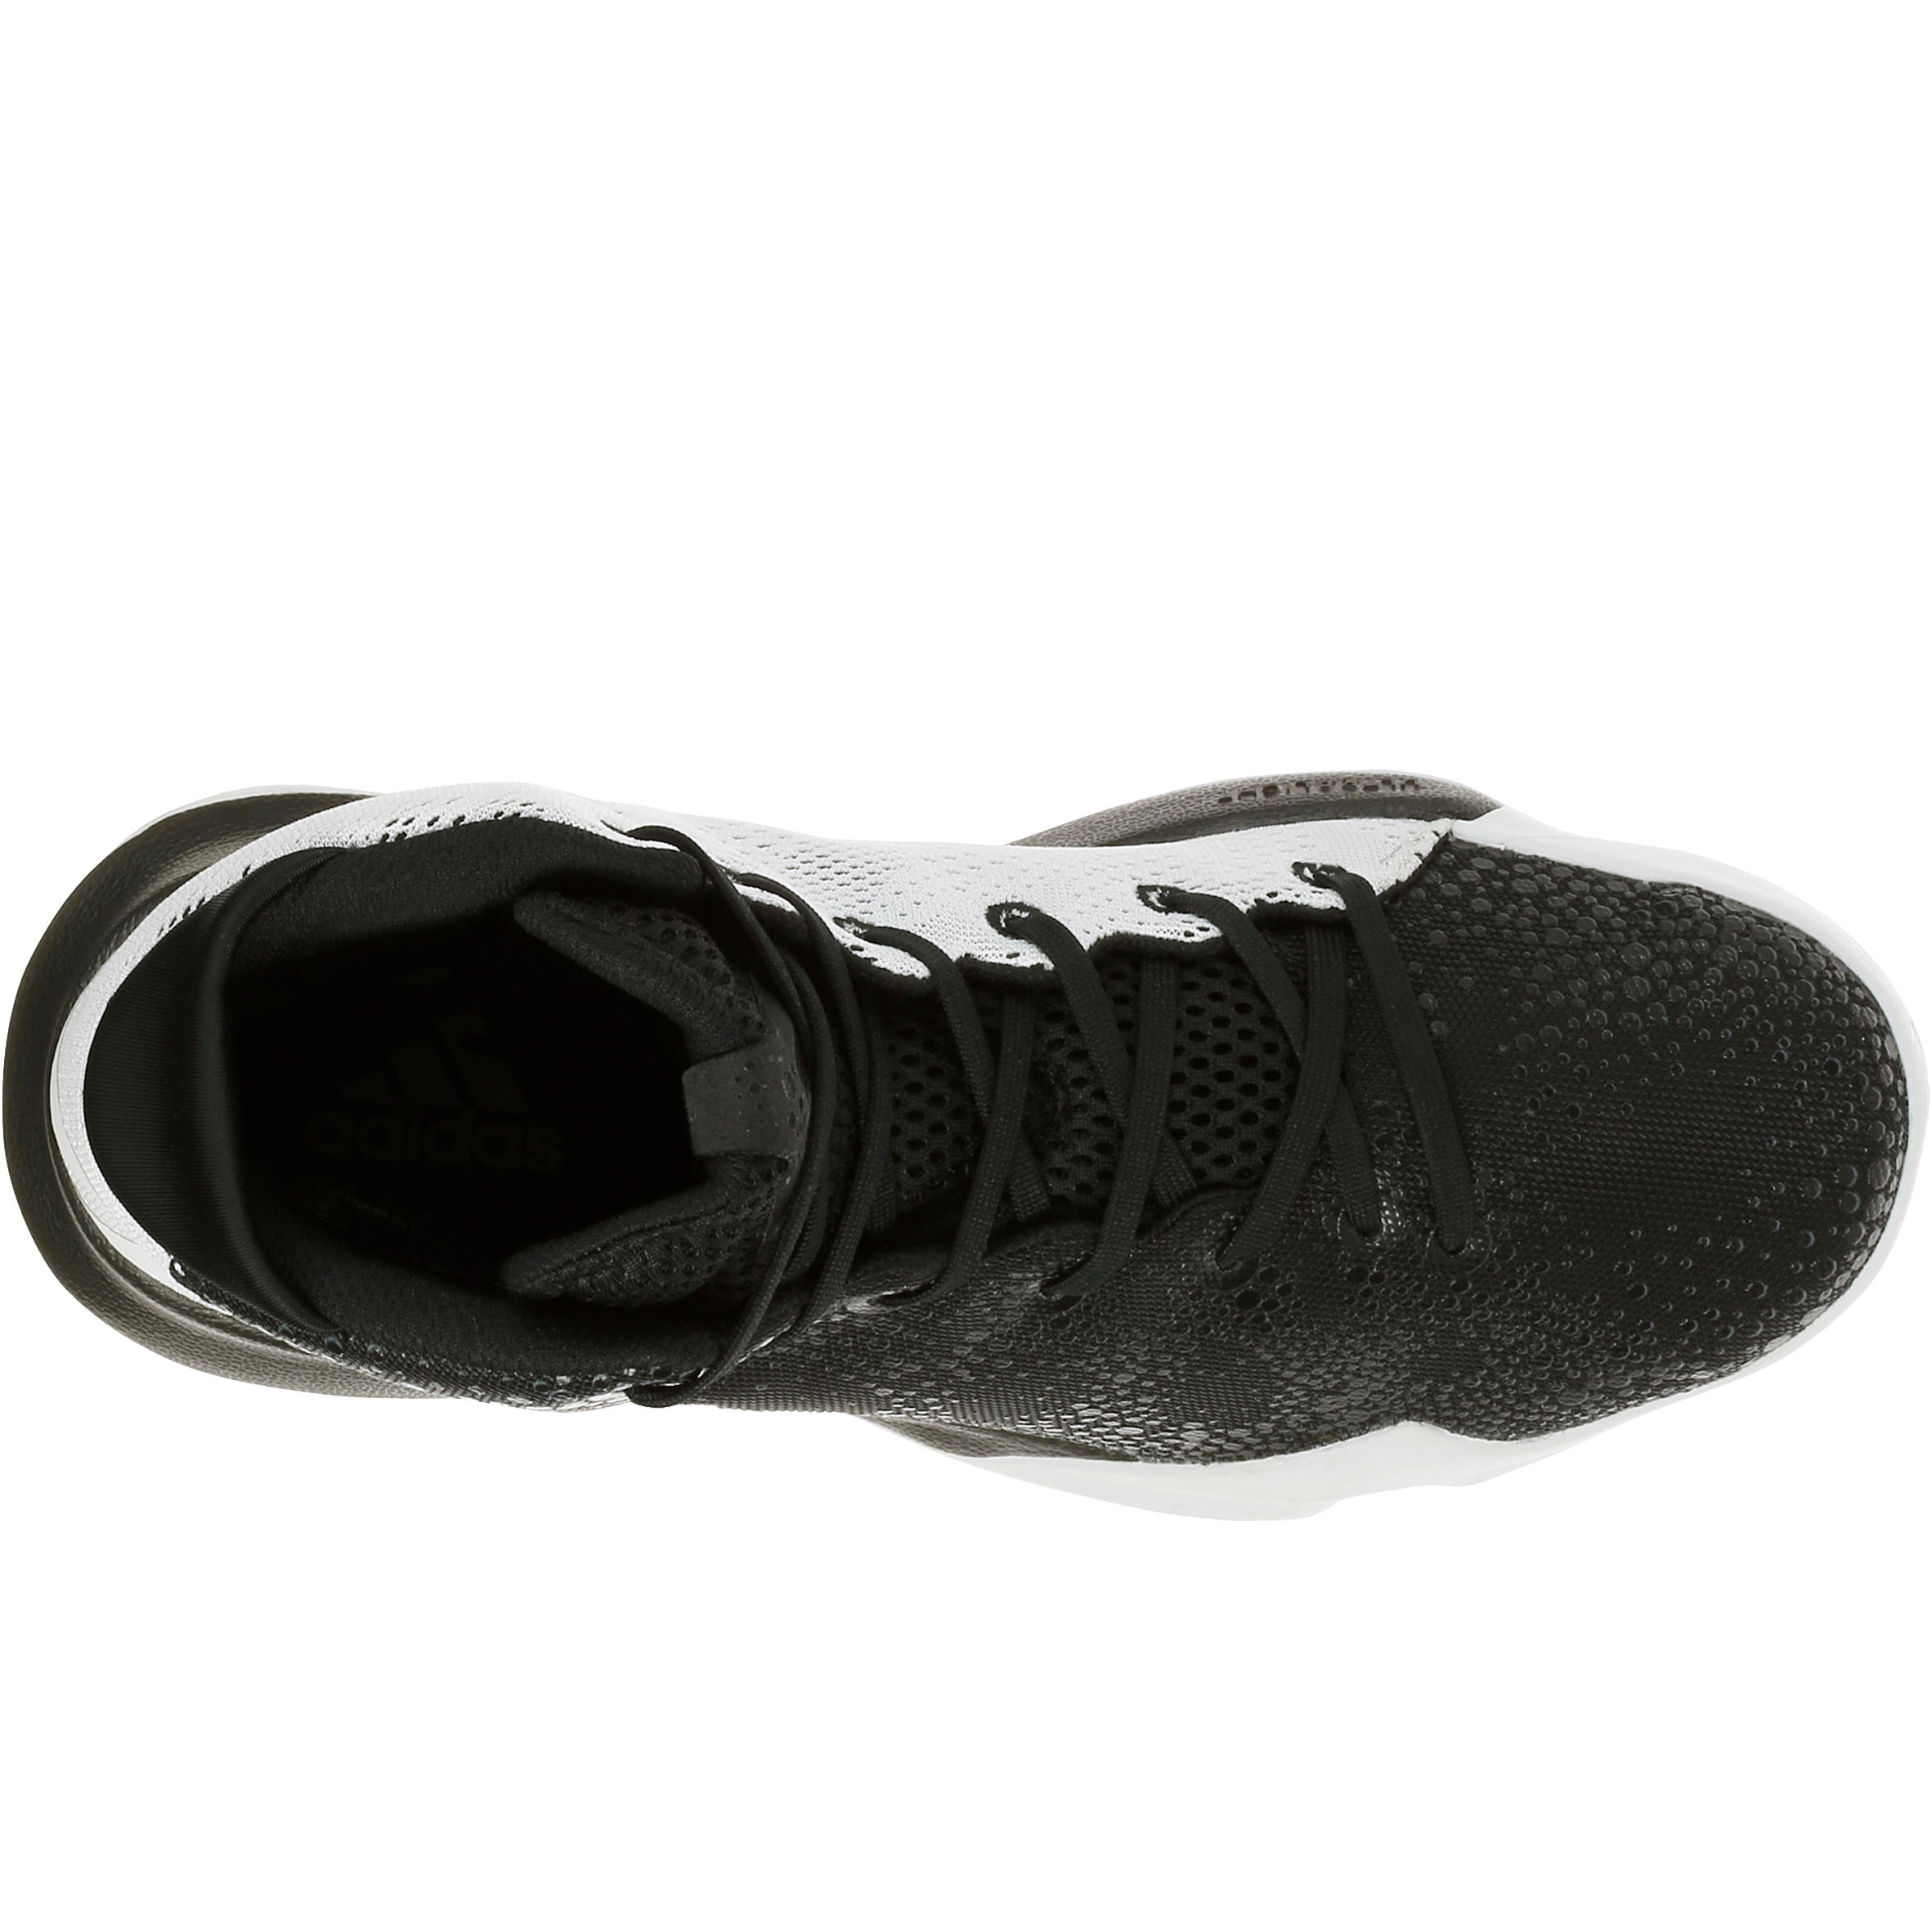 chaussures basketball adidas crazy heat blanche noire adidas